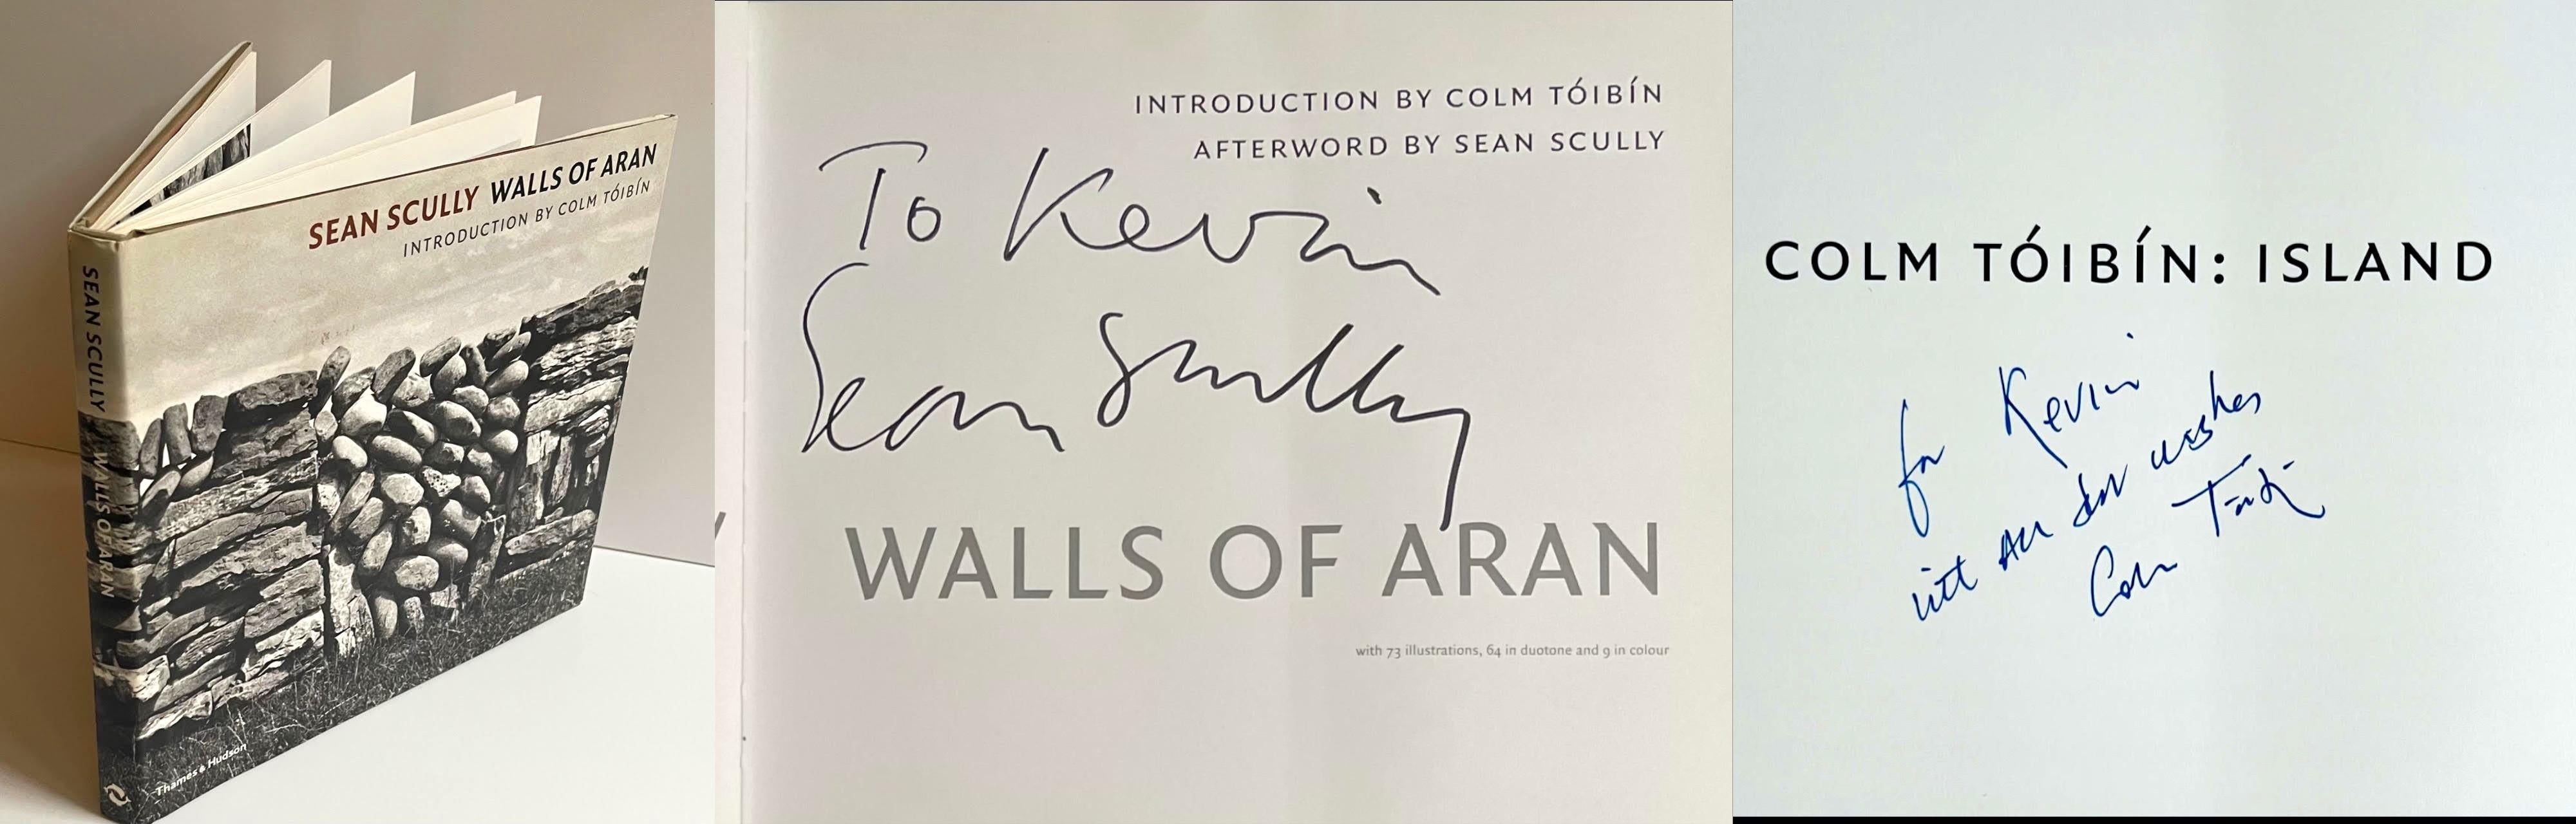 sean scully walls of aran